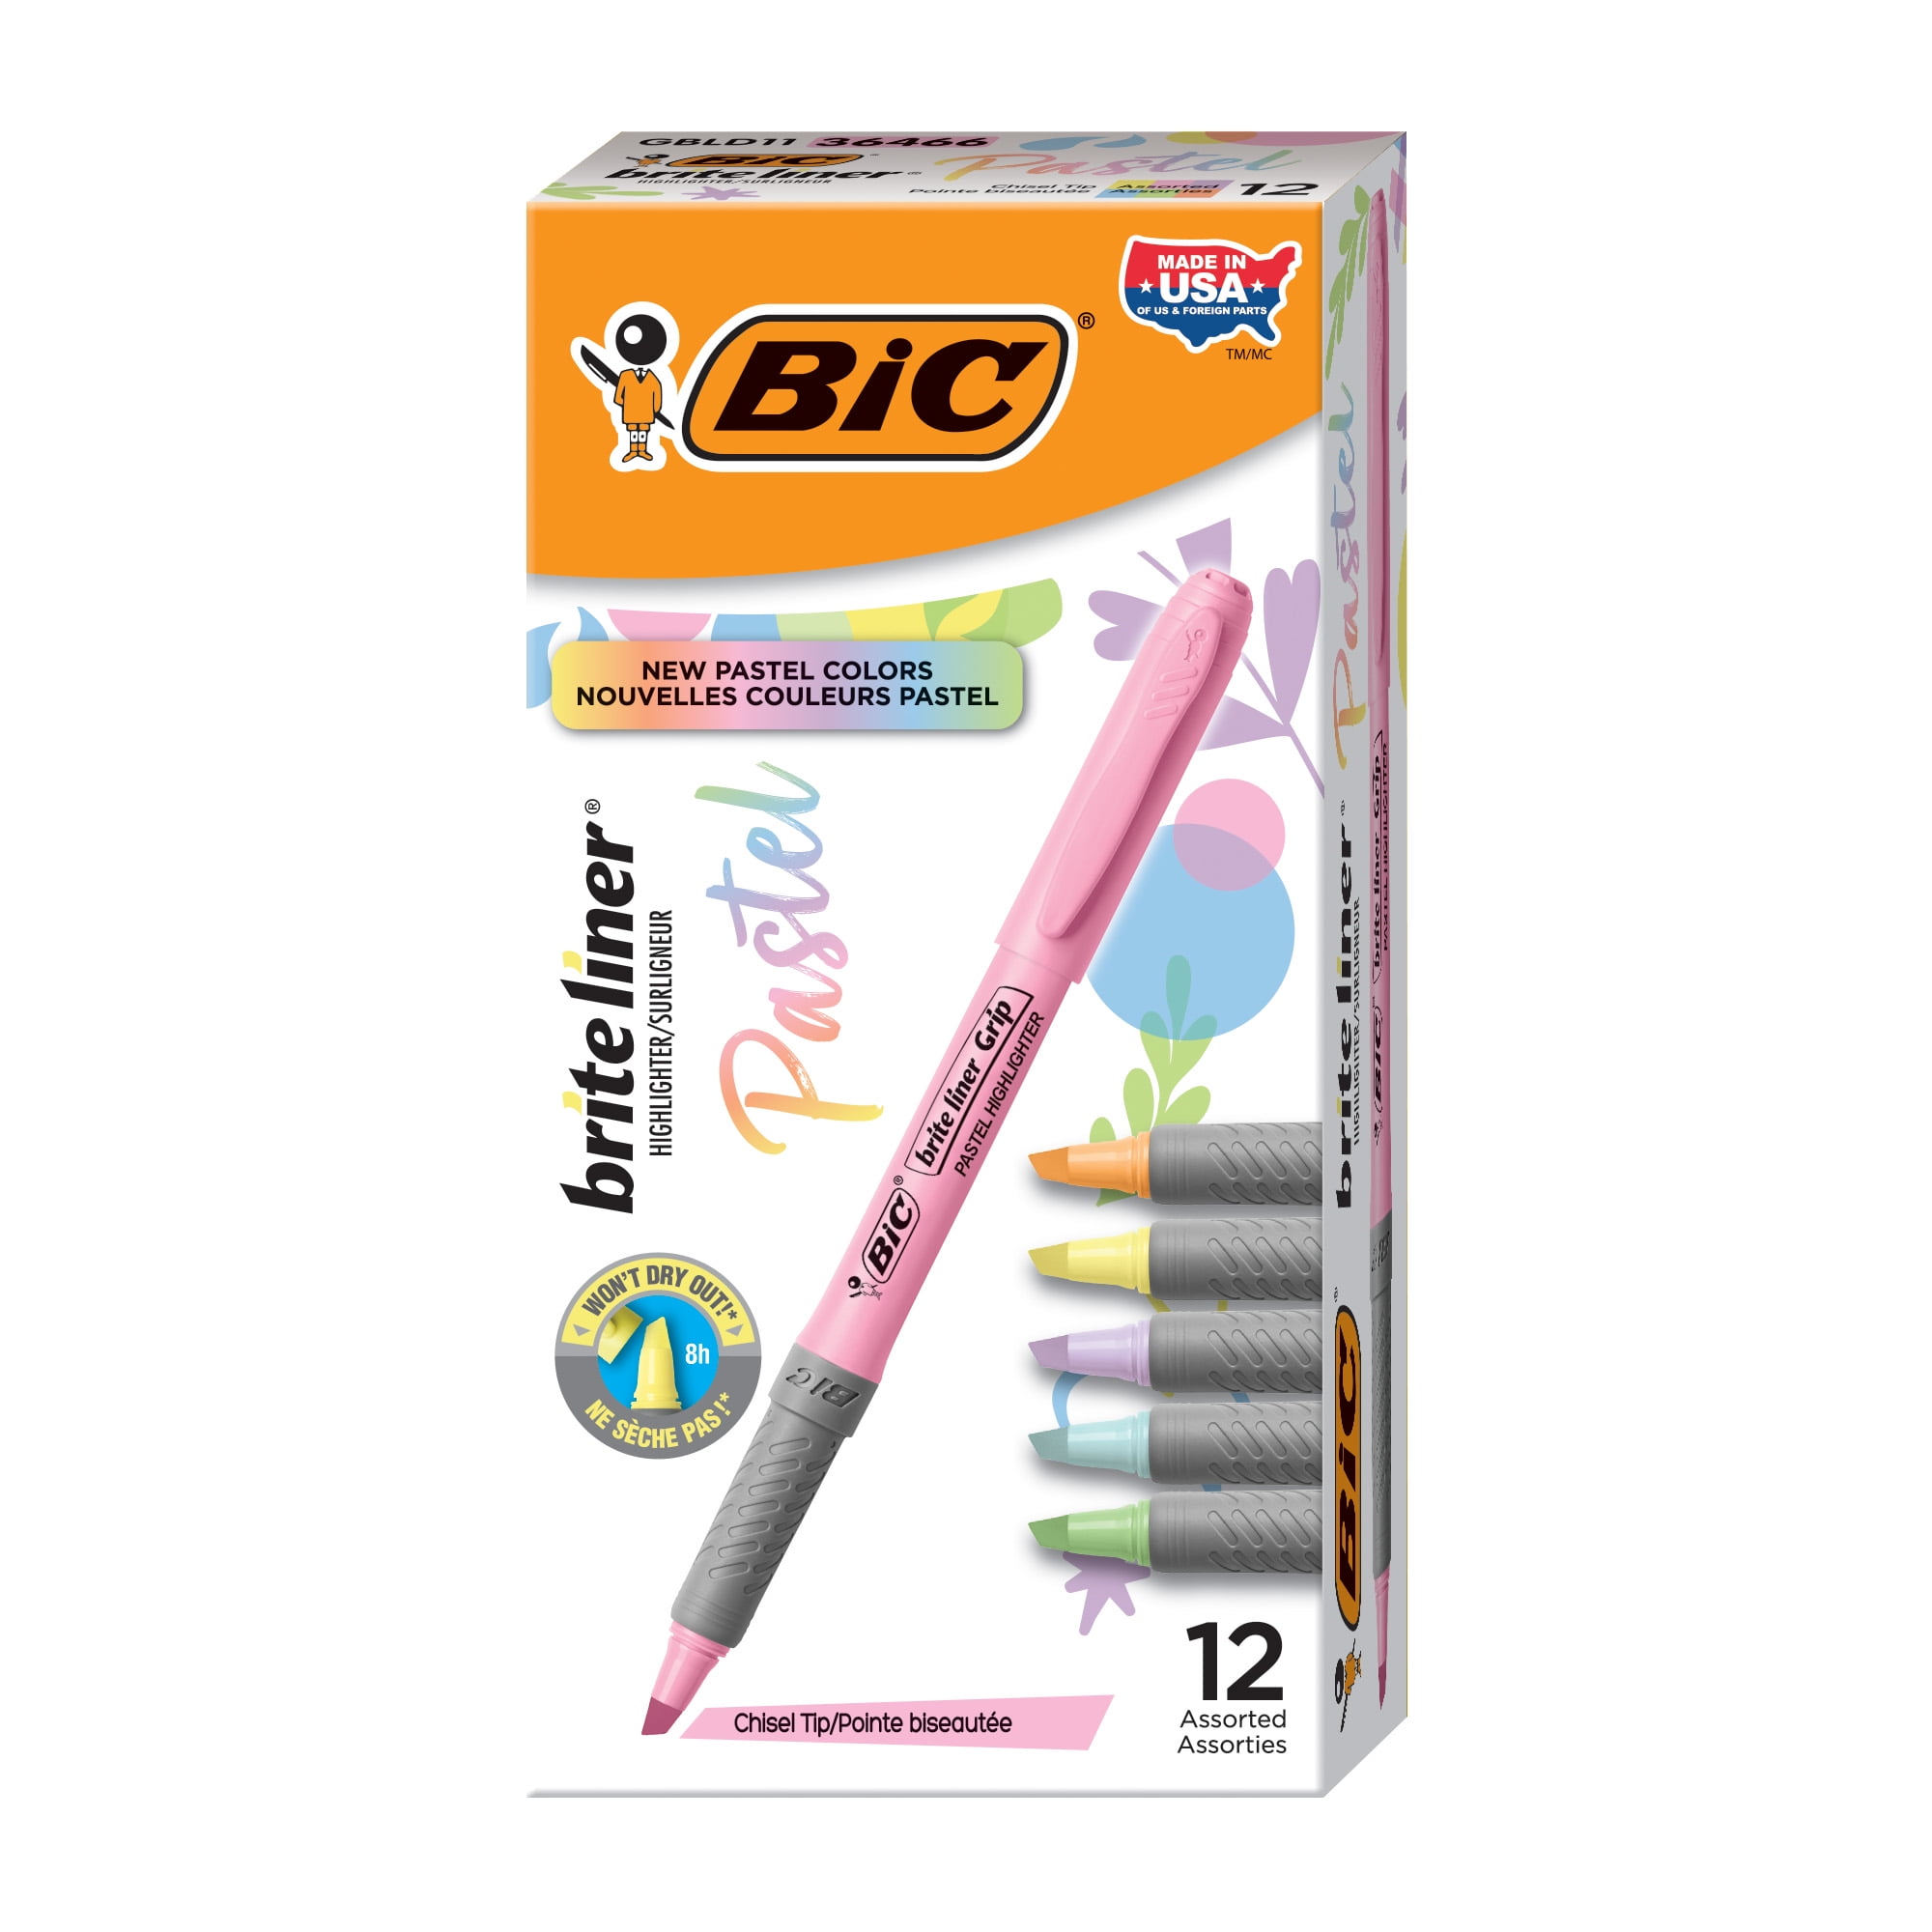 bic highlighters pastel